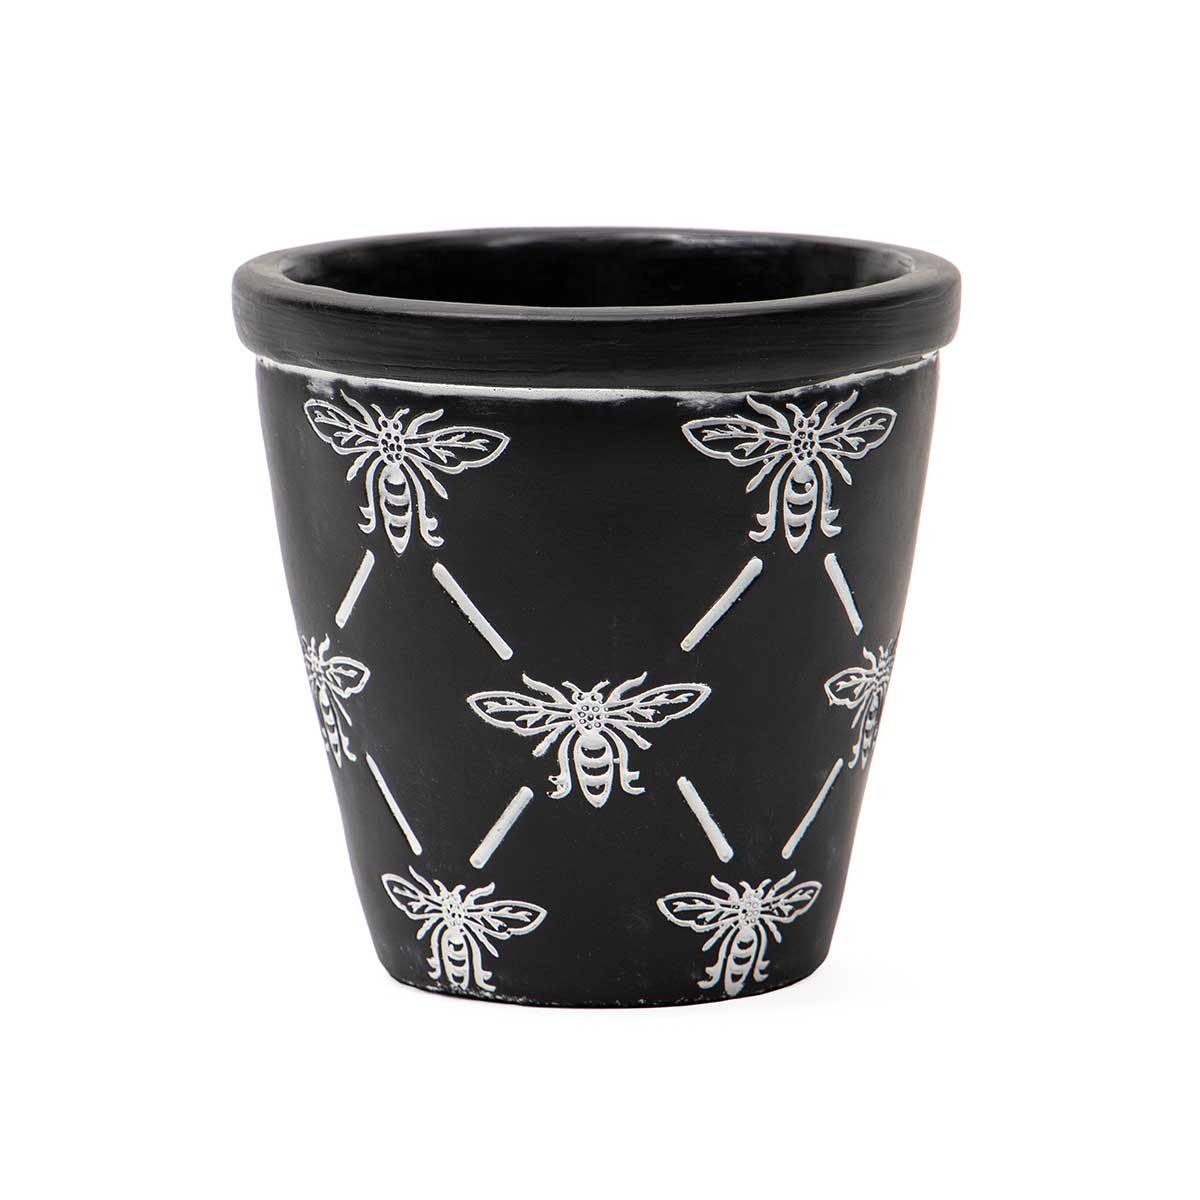 !Bee Concrete Pot Black/White 4.75"x4.5"